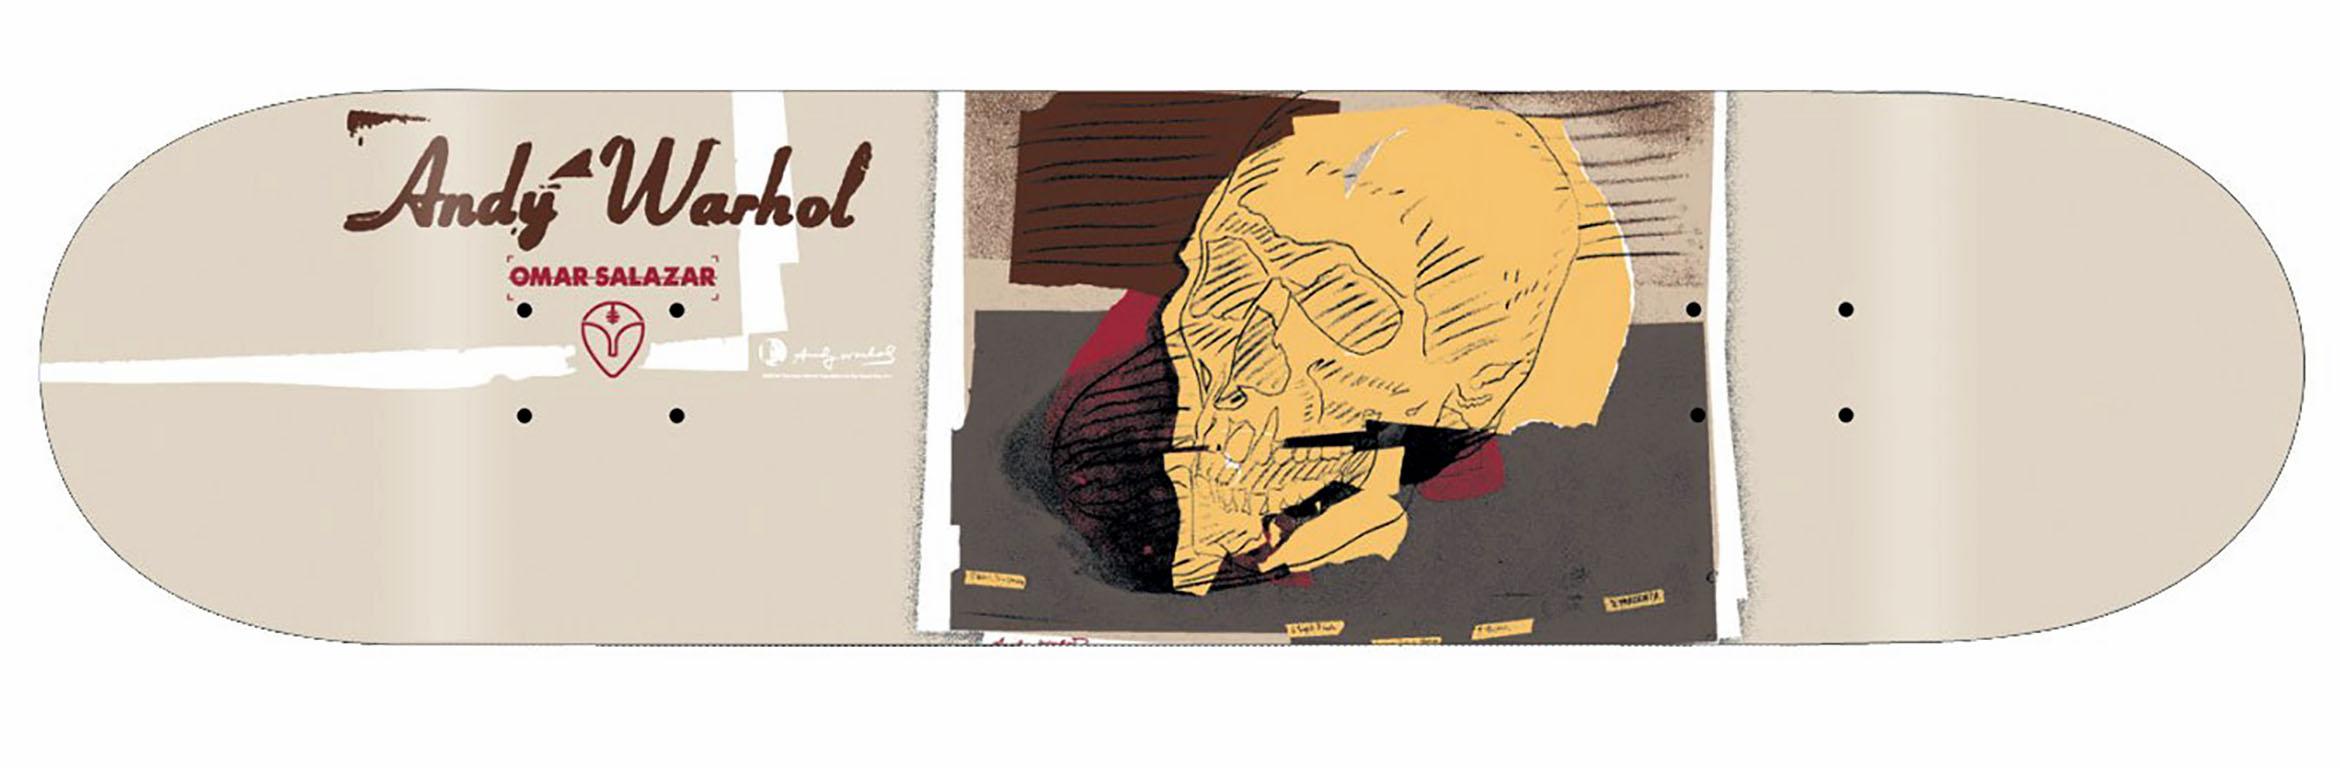 Warhol Skull Skateboard Deck - Print by (after) Andy Warhol